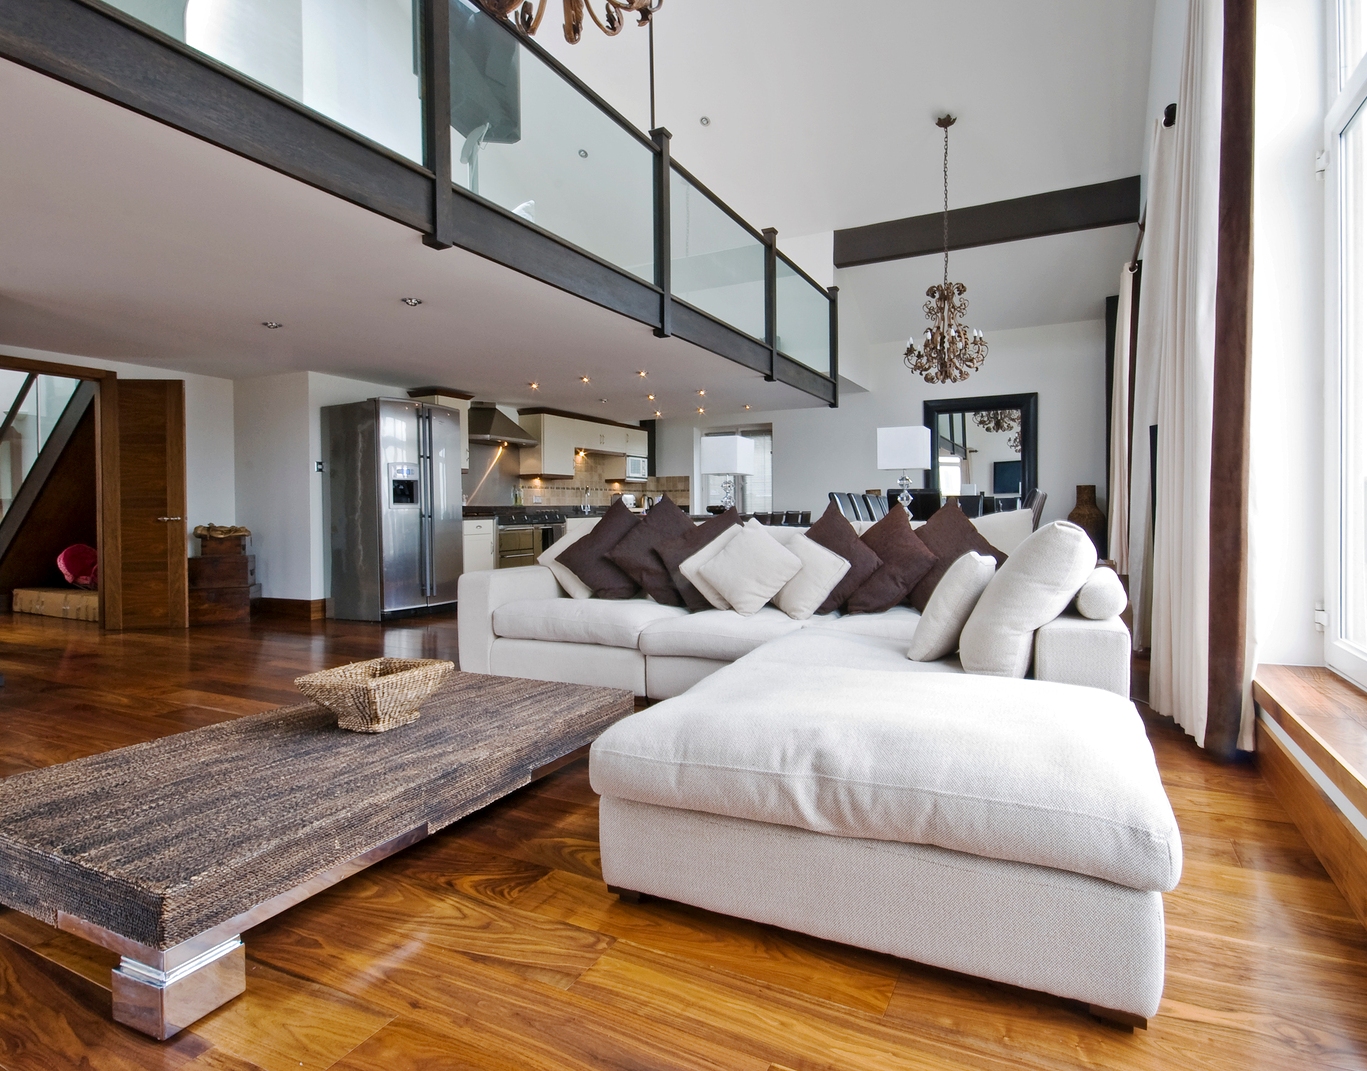 20 Open Living Room Design Ideas